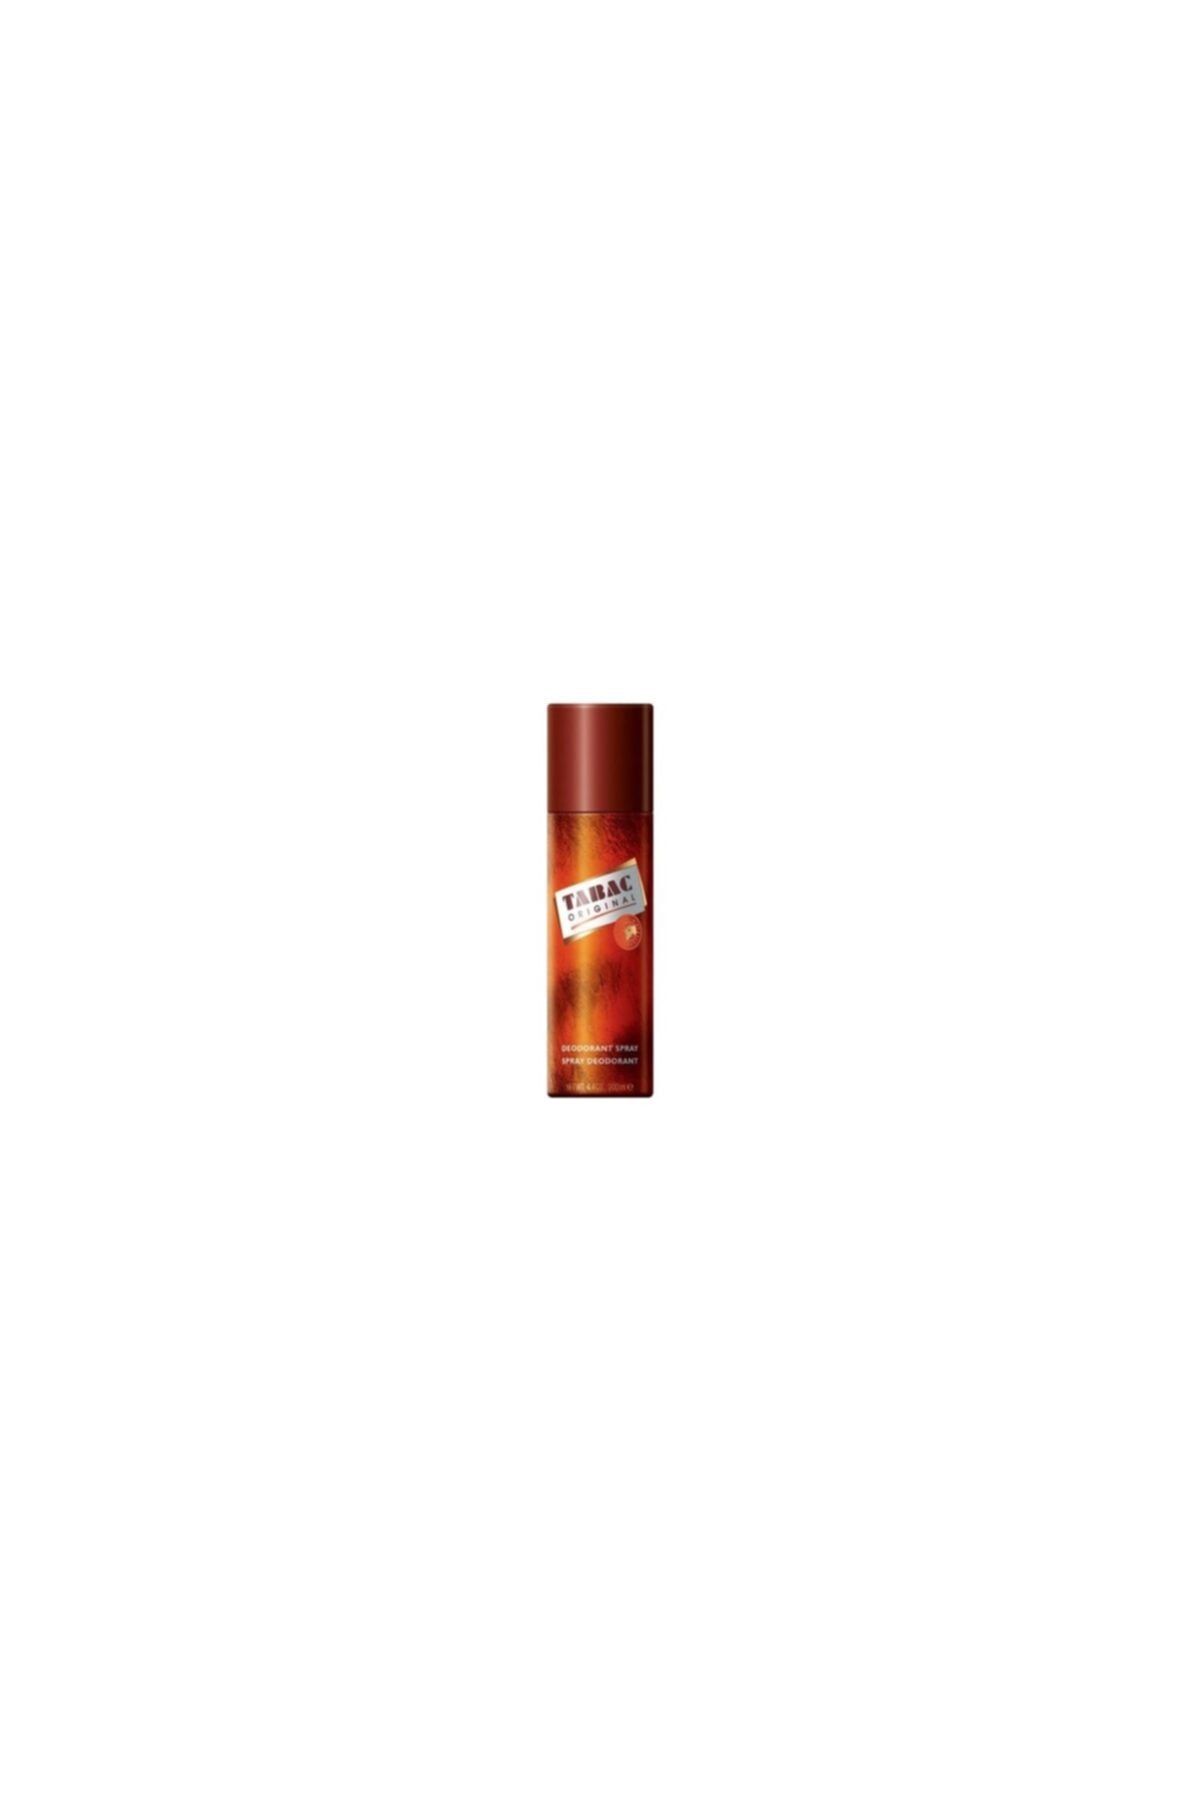 Tabac Original  200 ml  Deodorant Spray 01170041070